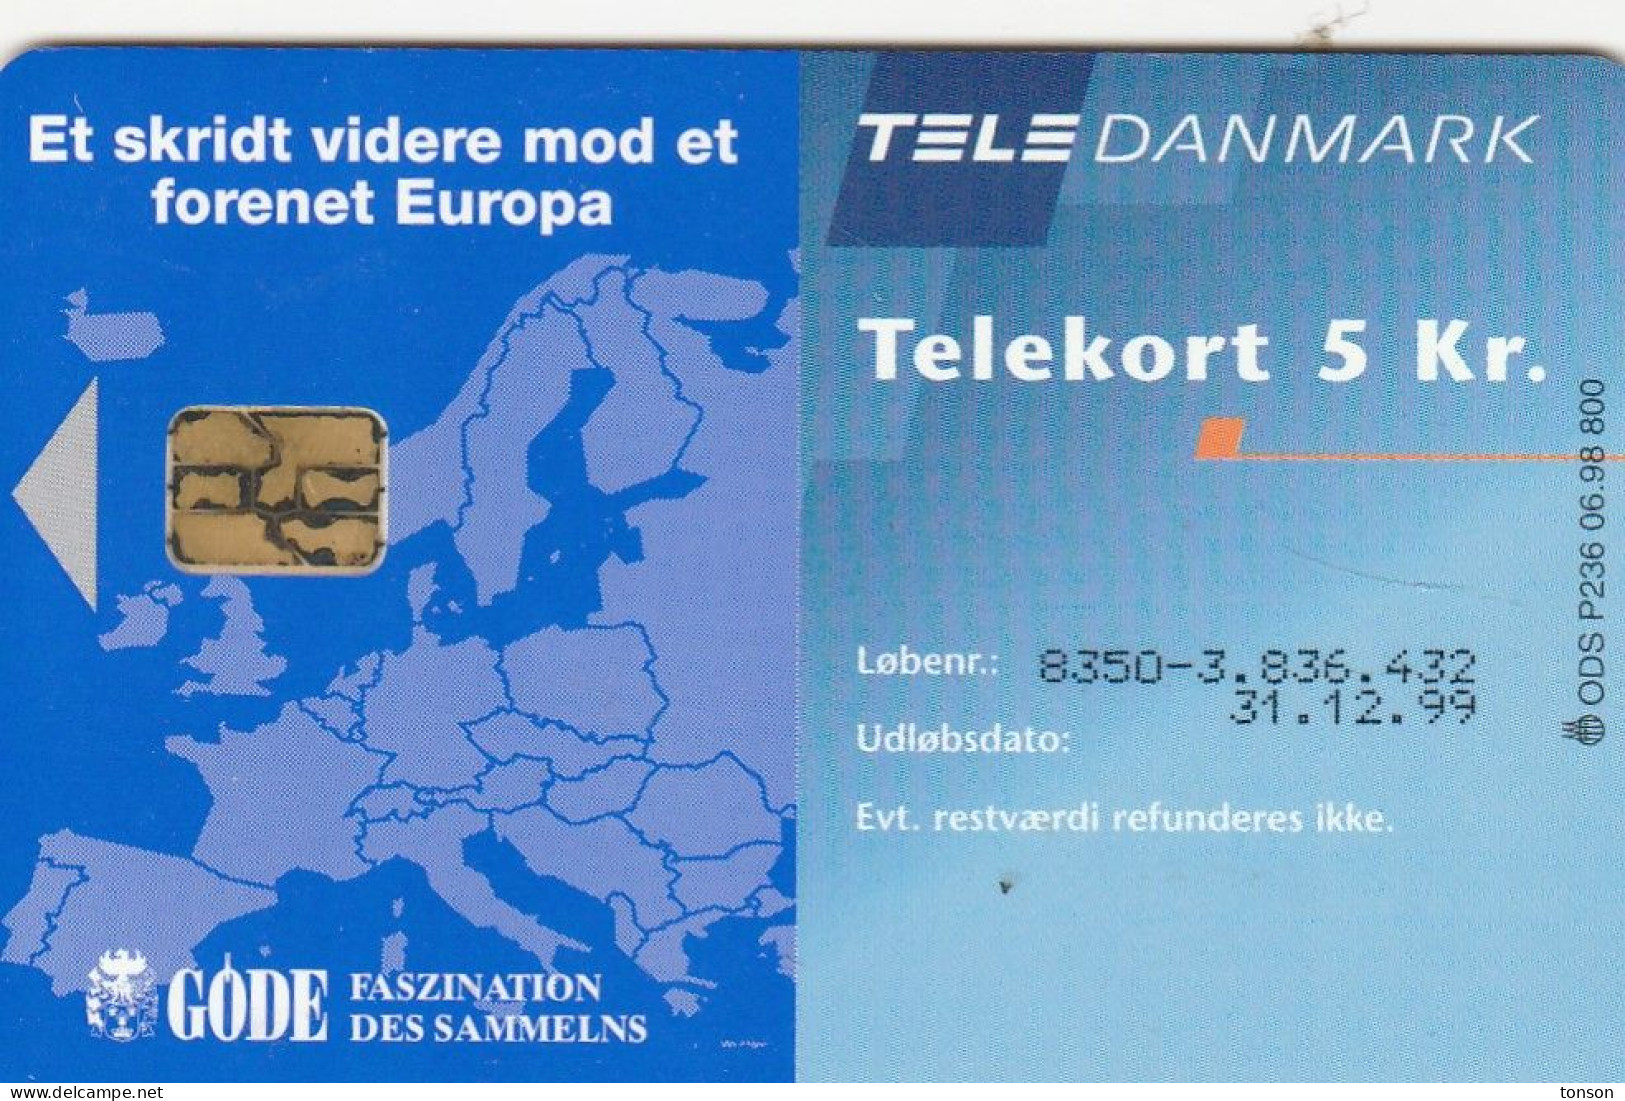 Denmark, P 236, Ecu - Ireland, Mint, Only 800 Issued, 2 Scans.   Please Read - Dänemark